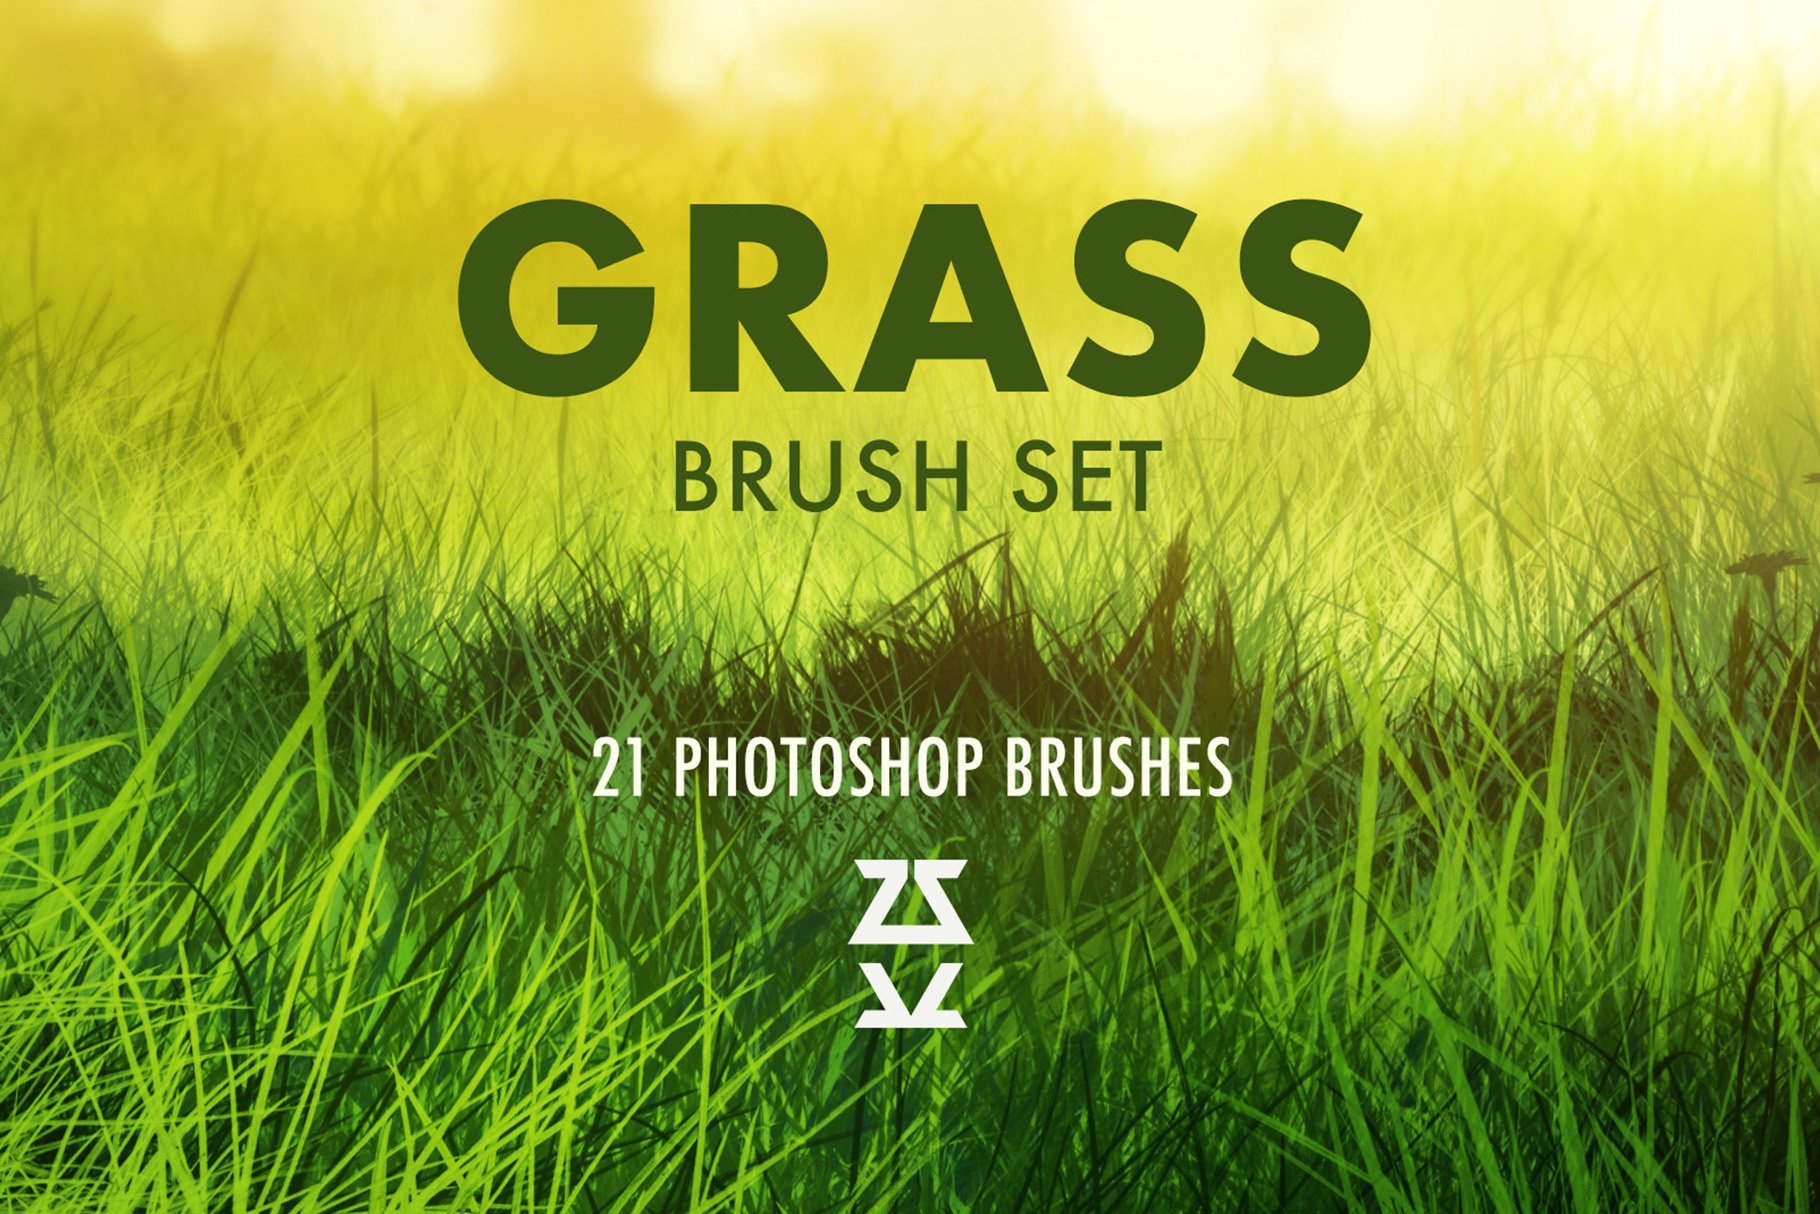 Grass 2 Brush Setcover image.